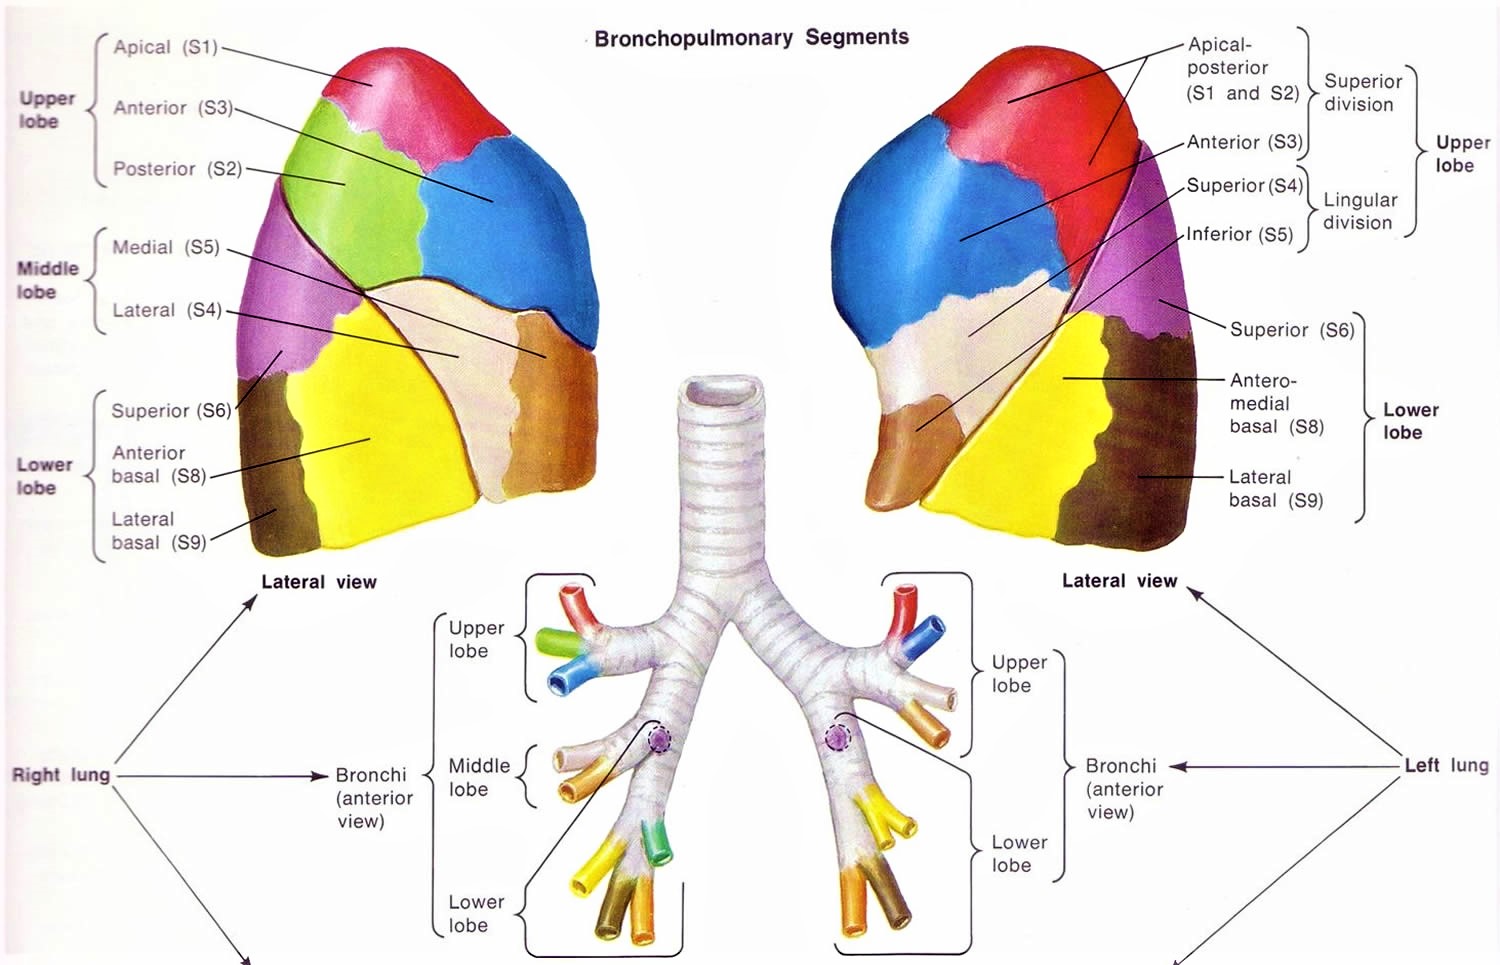 Lung segments